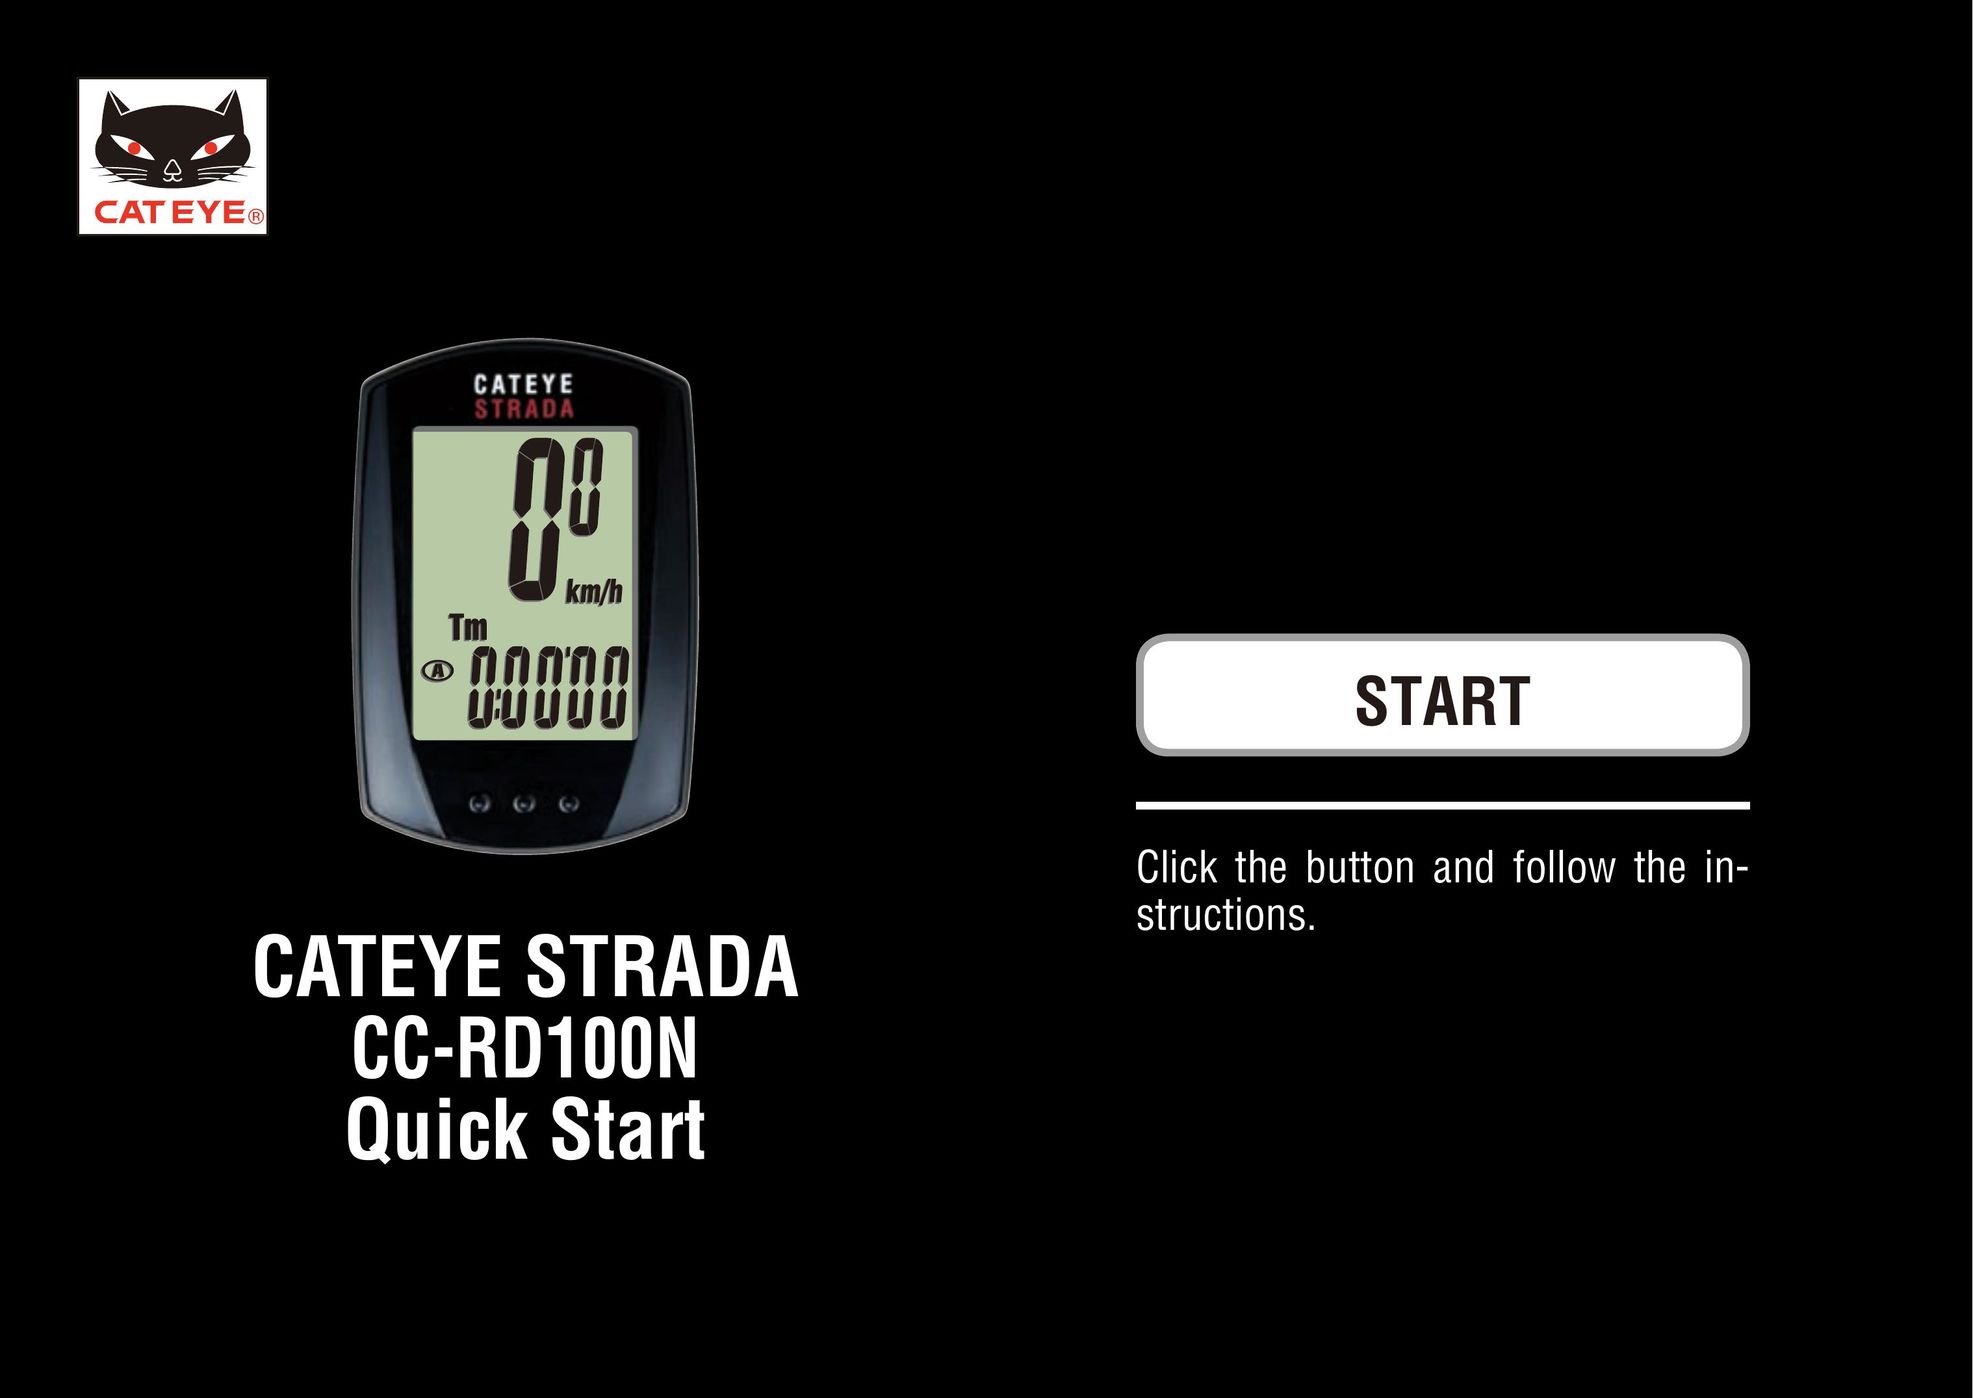 Cateye CC-RD100N Cyclometer User Manual